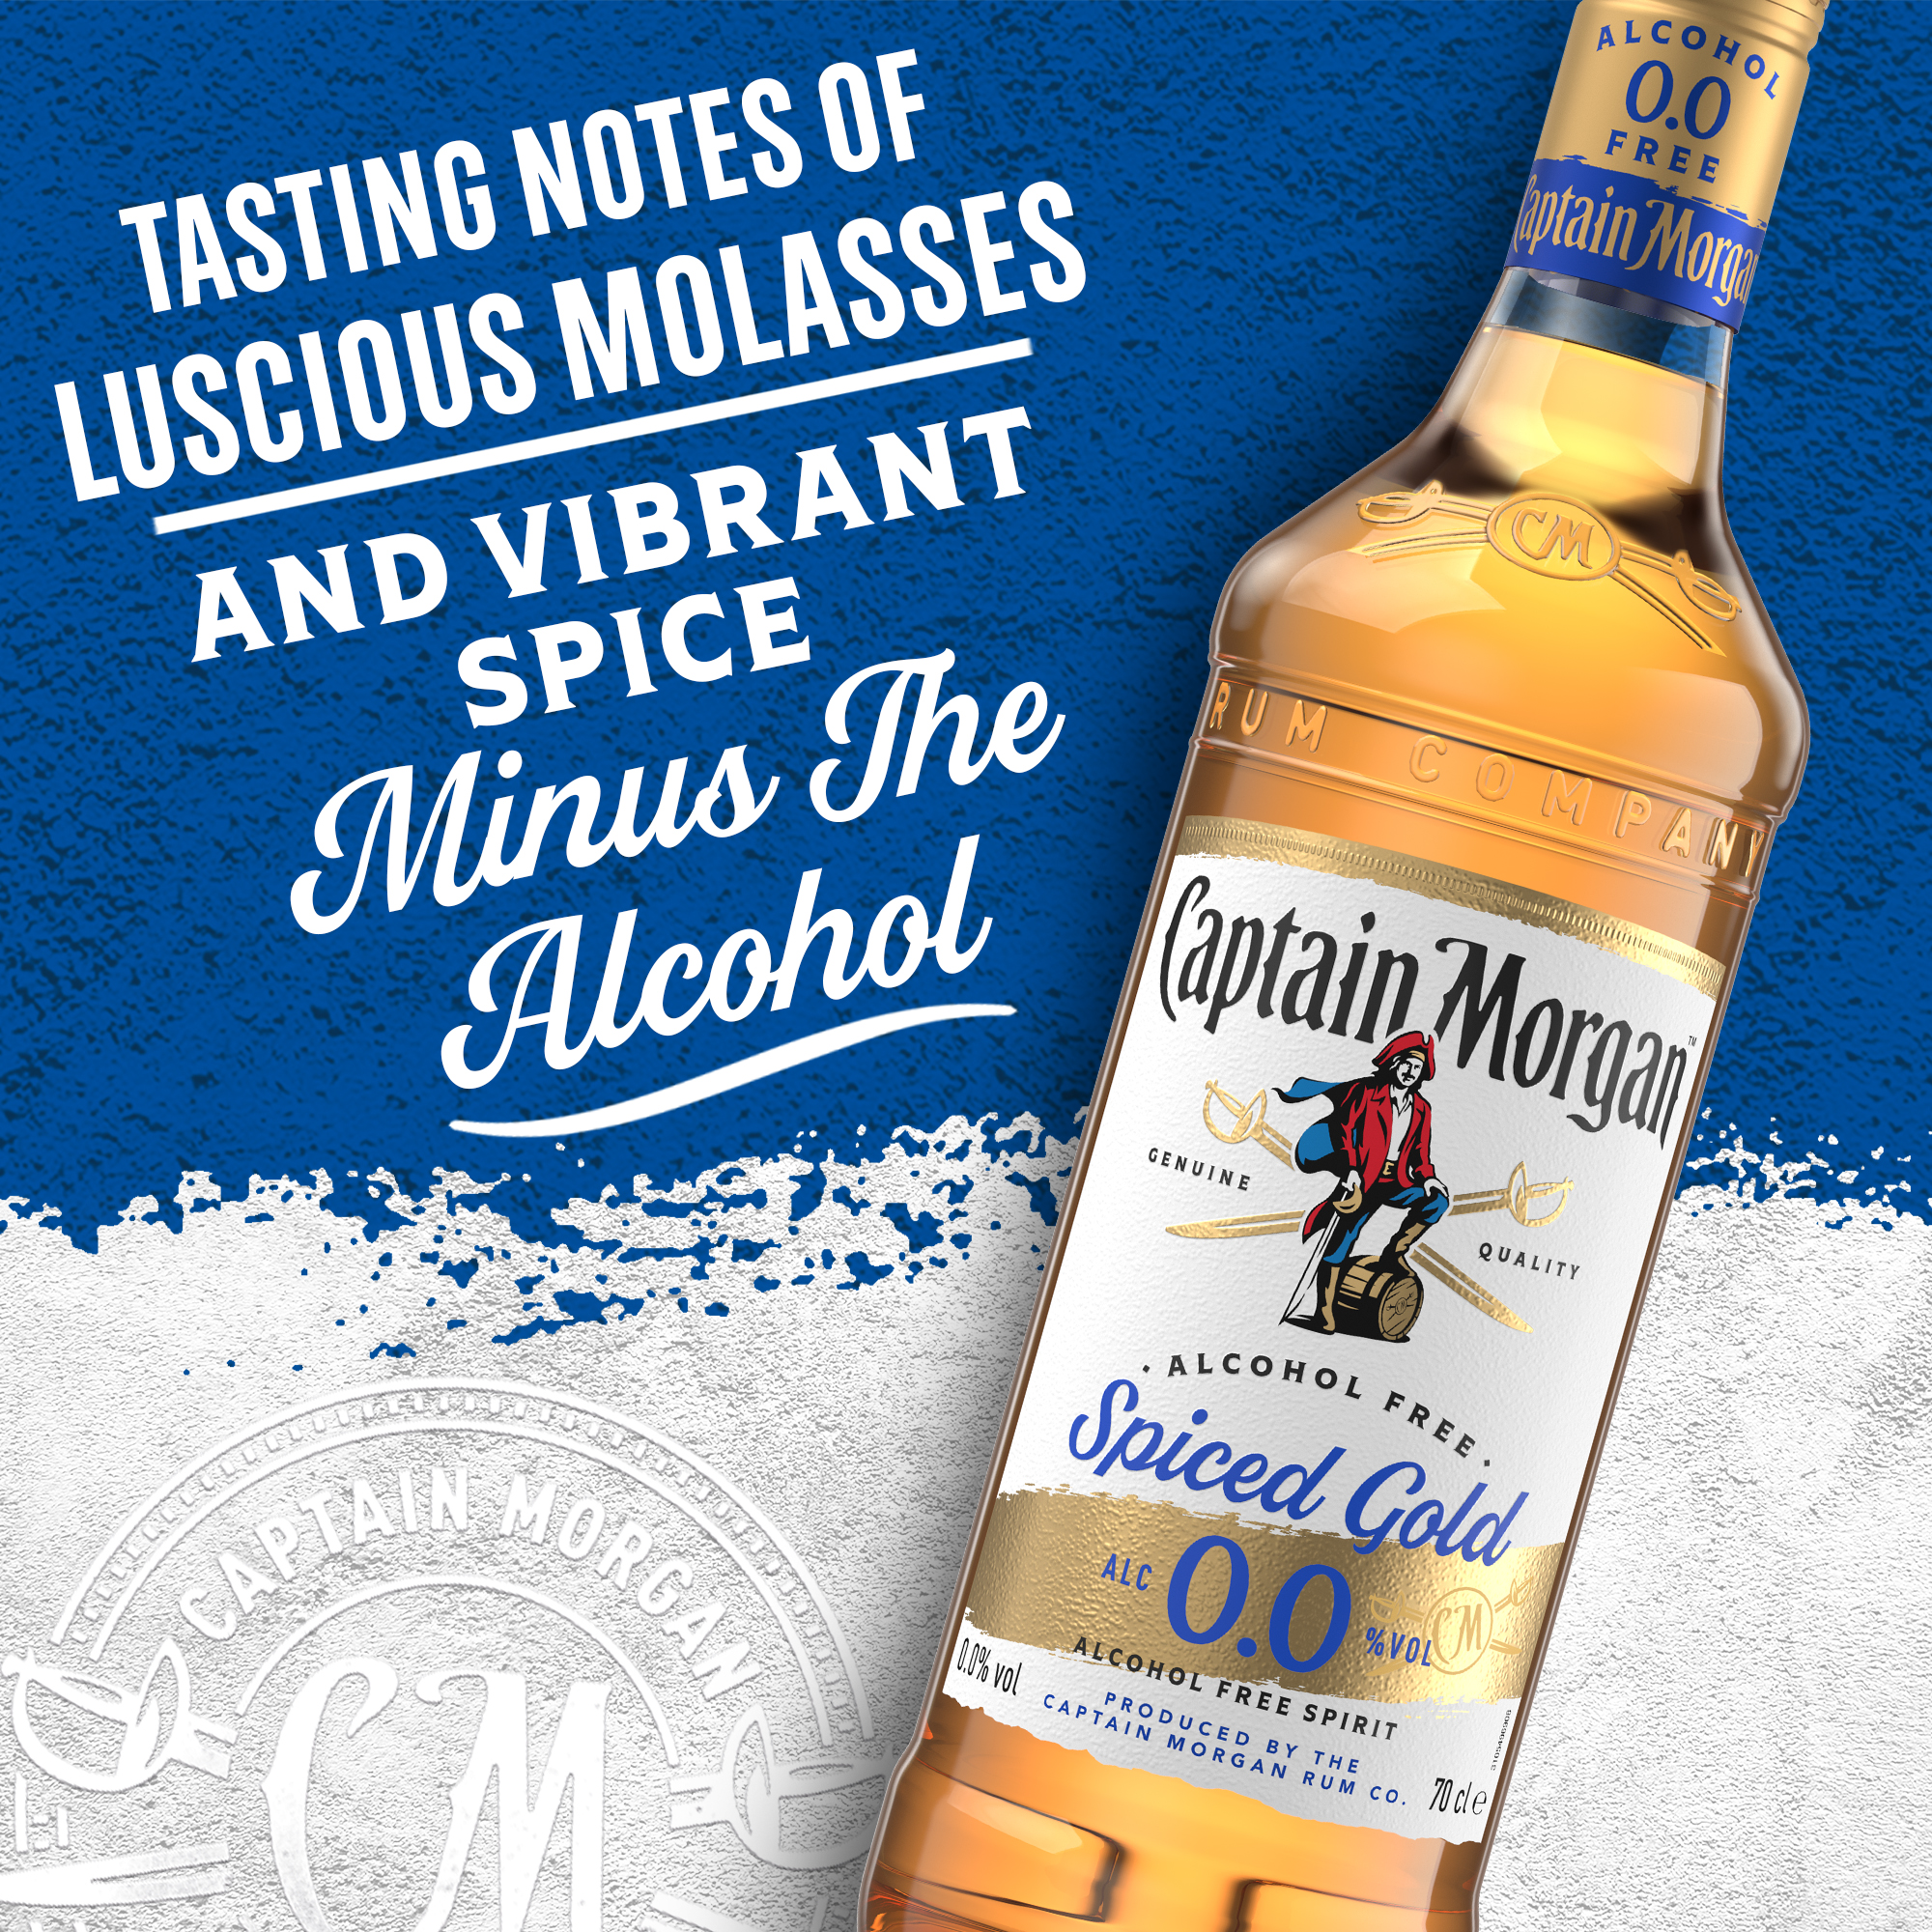 Captain Morgan 70cl Spirit, 0.0 Free The Spiced | Gold Alcohol Bar